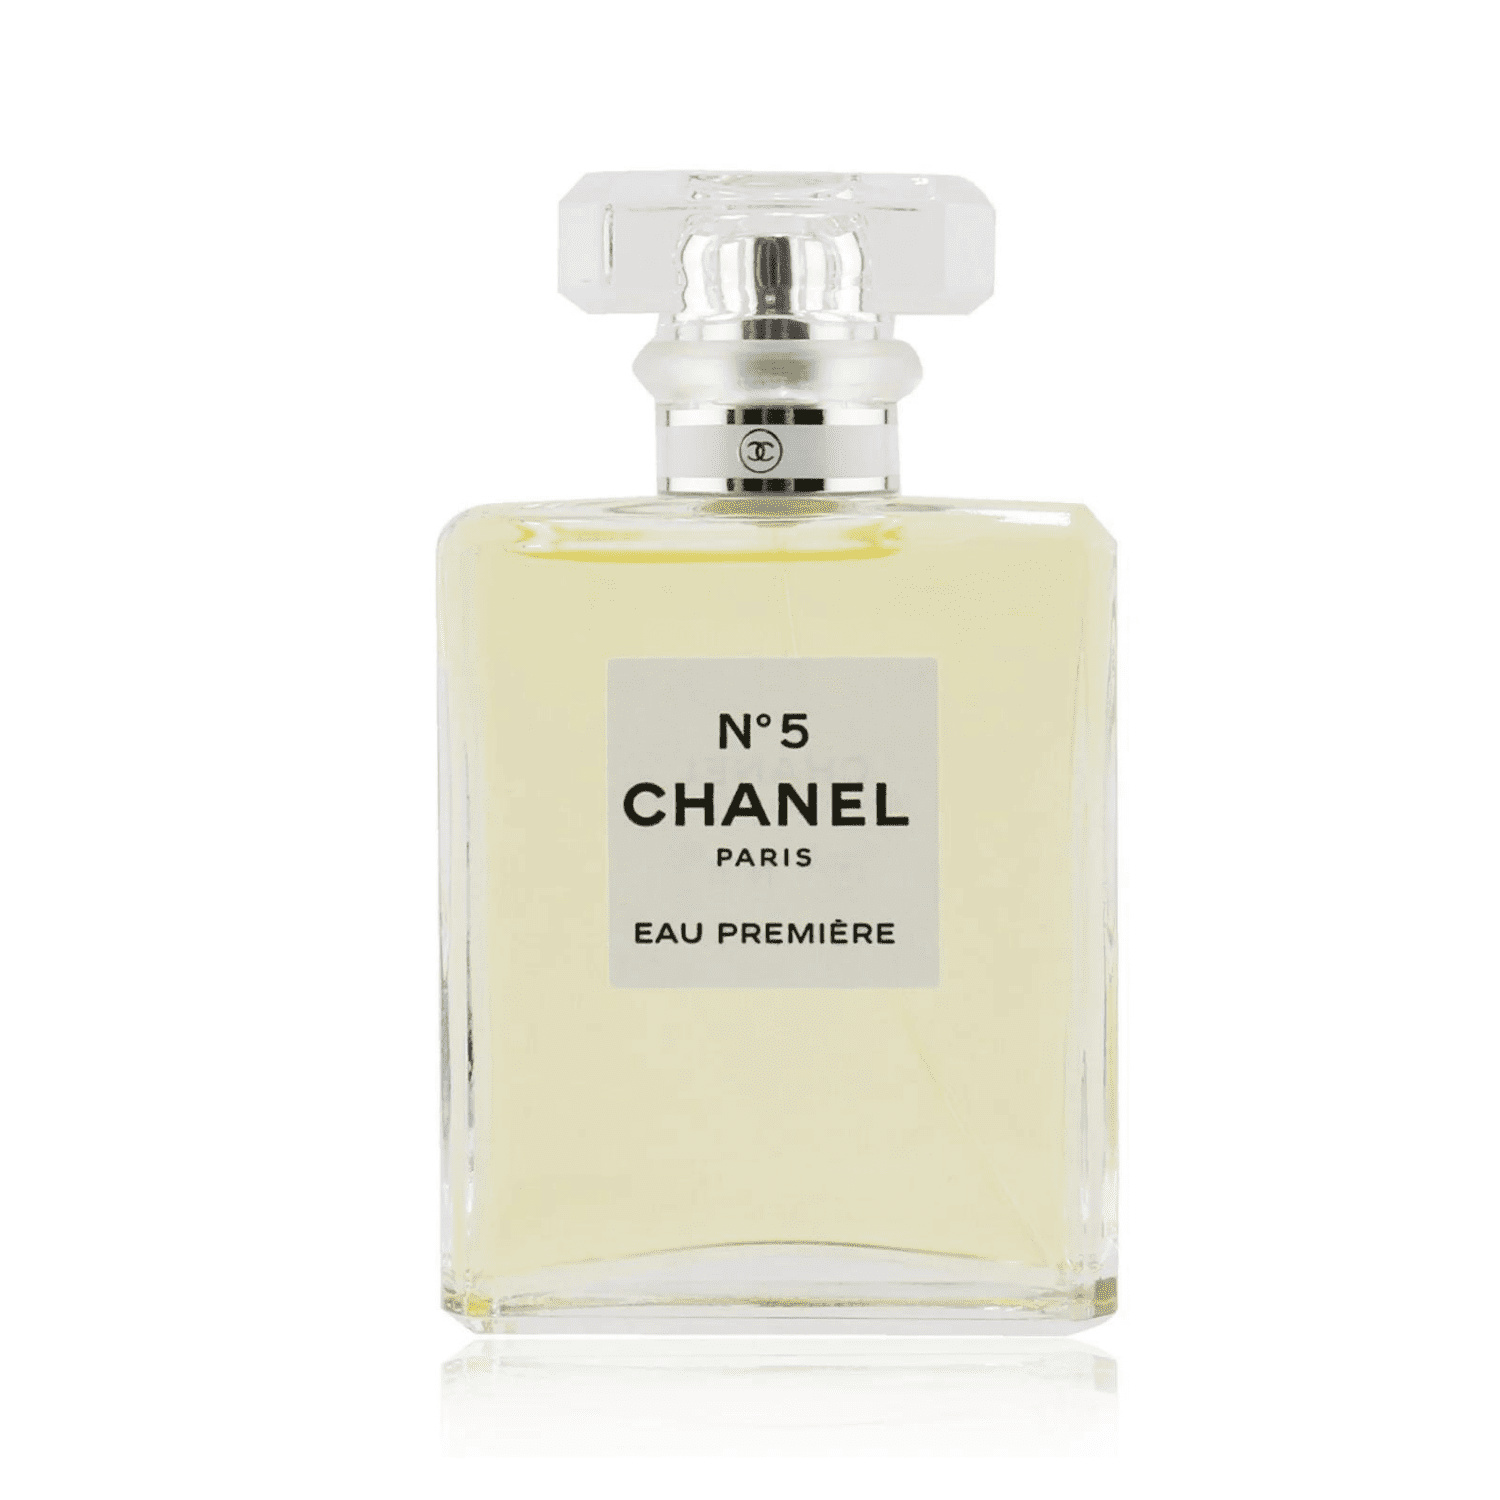 Chanel Coco Mademoiselle Eau De Toilette Twist & Spray 3 X 0.7 Ounces 